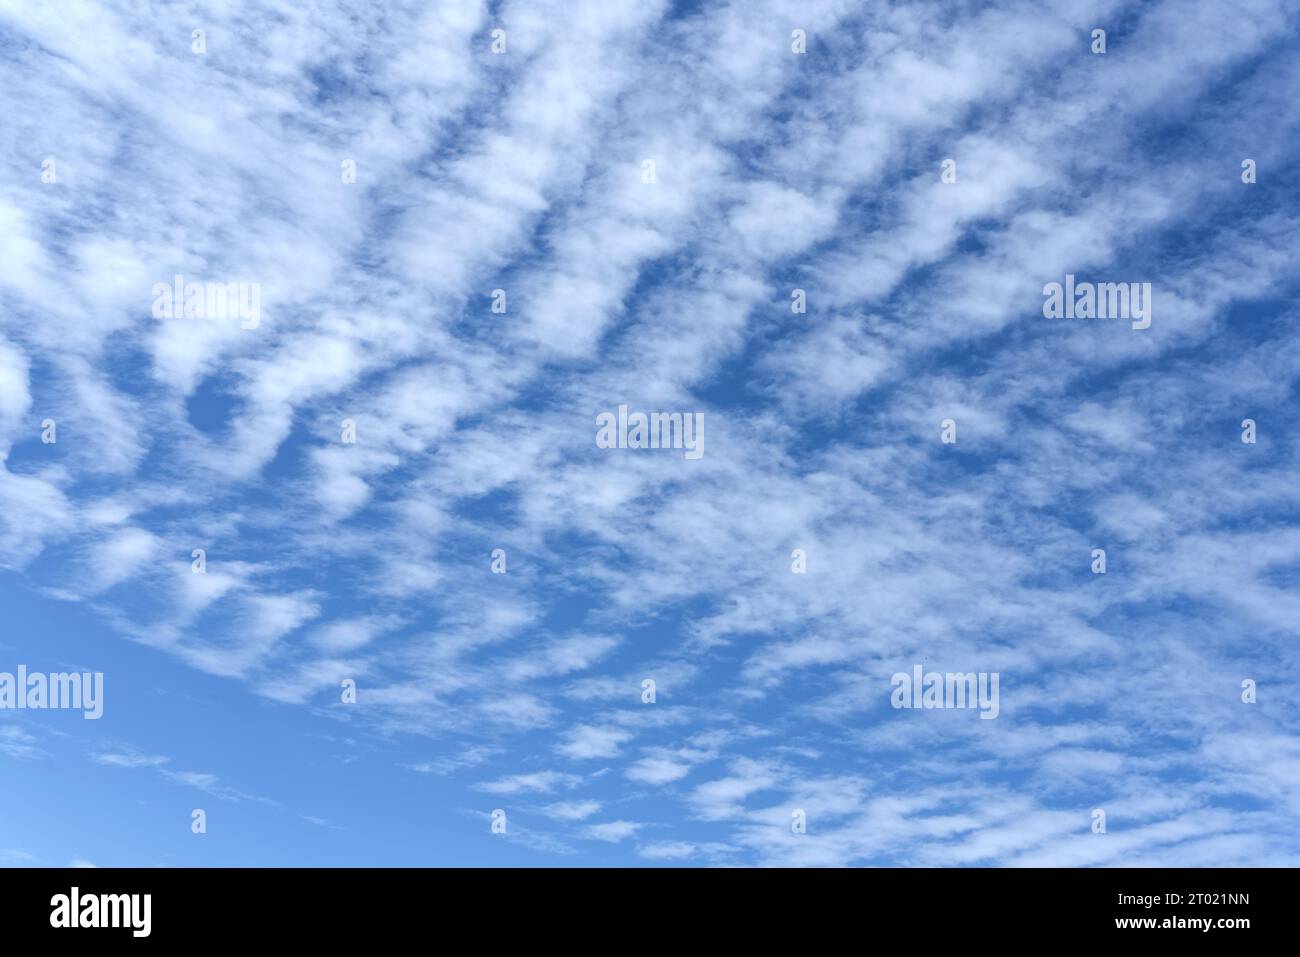 Altocumulus undulatus clouds forming a ripple effect pattern Stock Photo